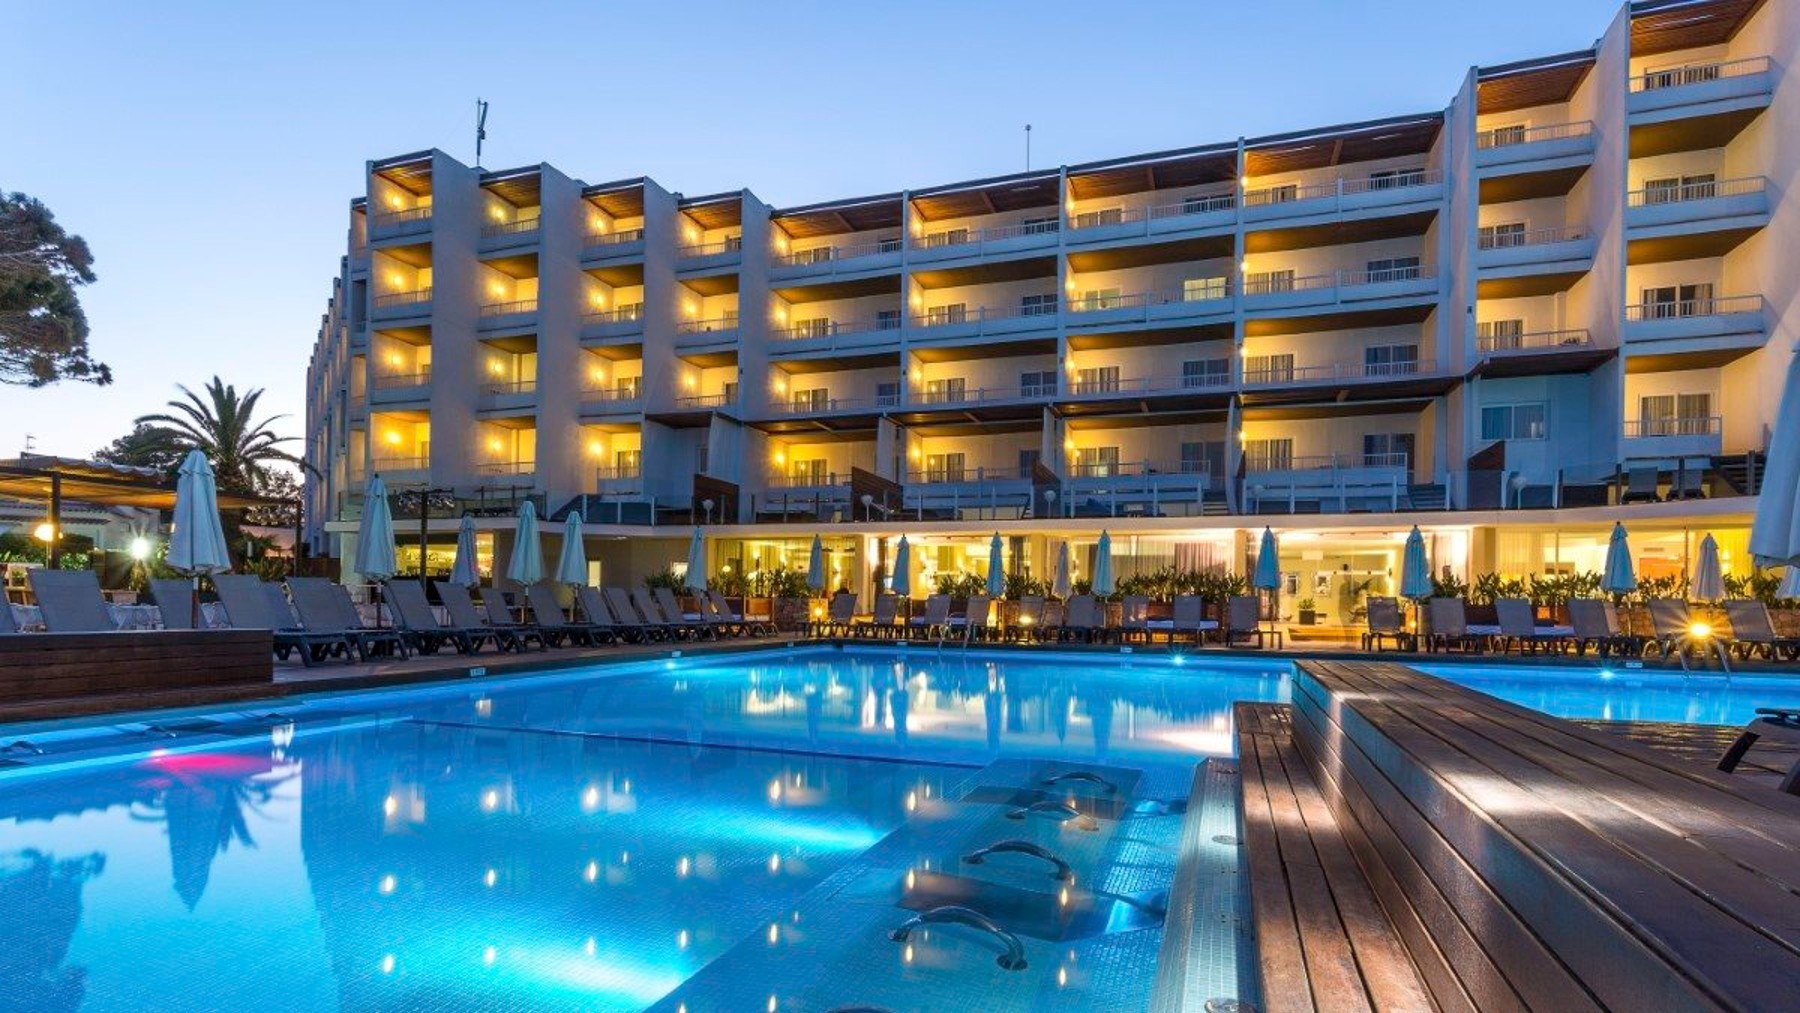 Hotel Don Carlos Ibiza.